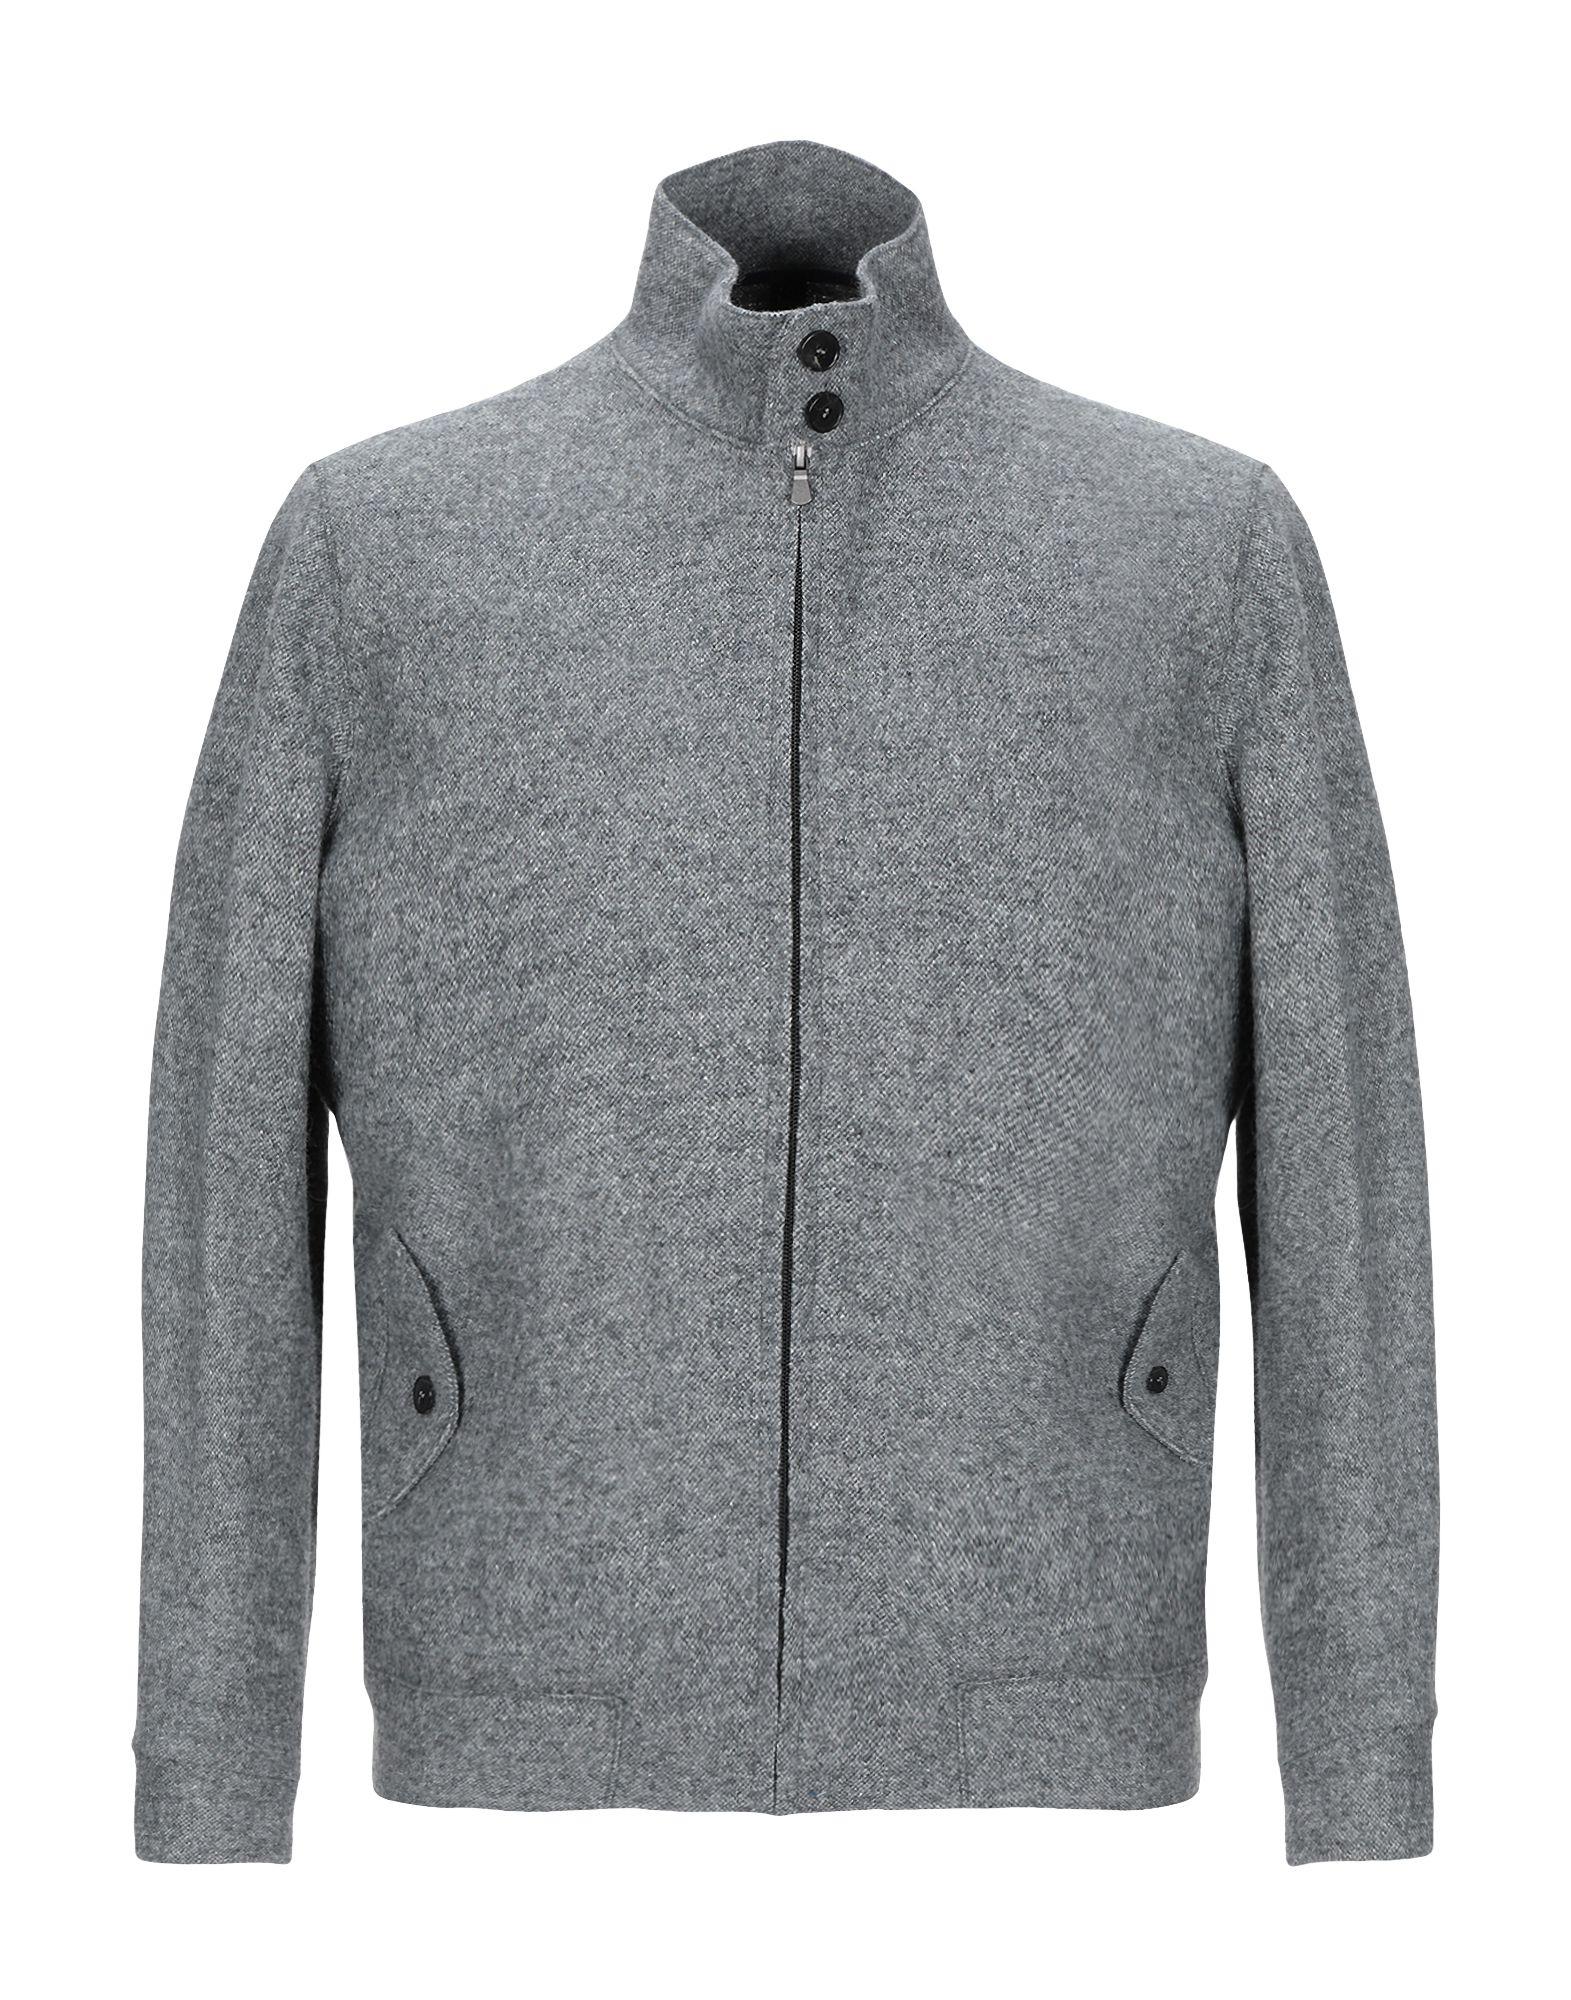 Harris Wharf London Jacket in Gray for Men - Lyst